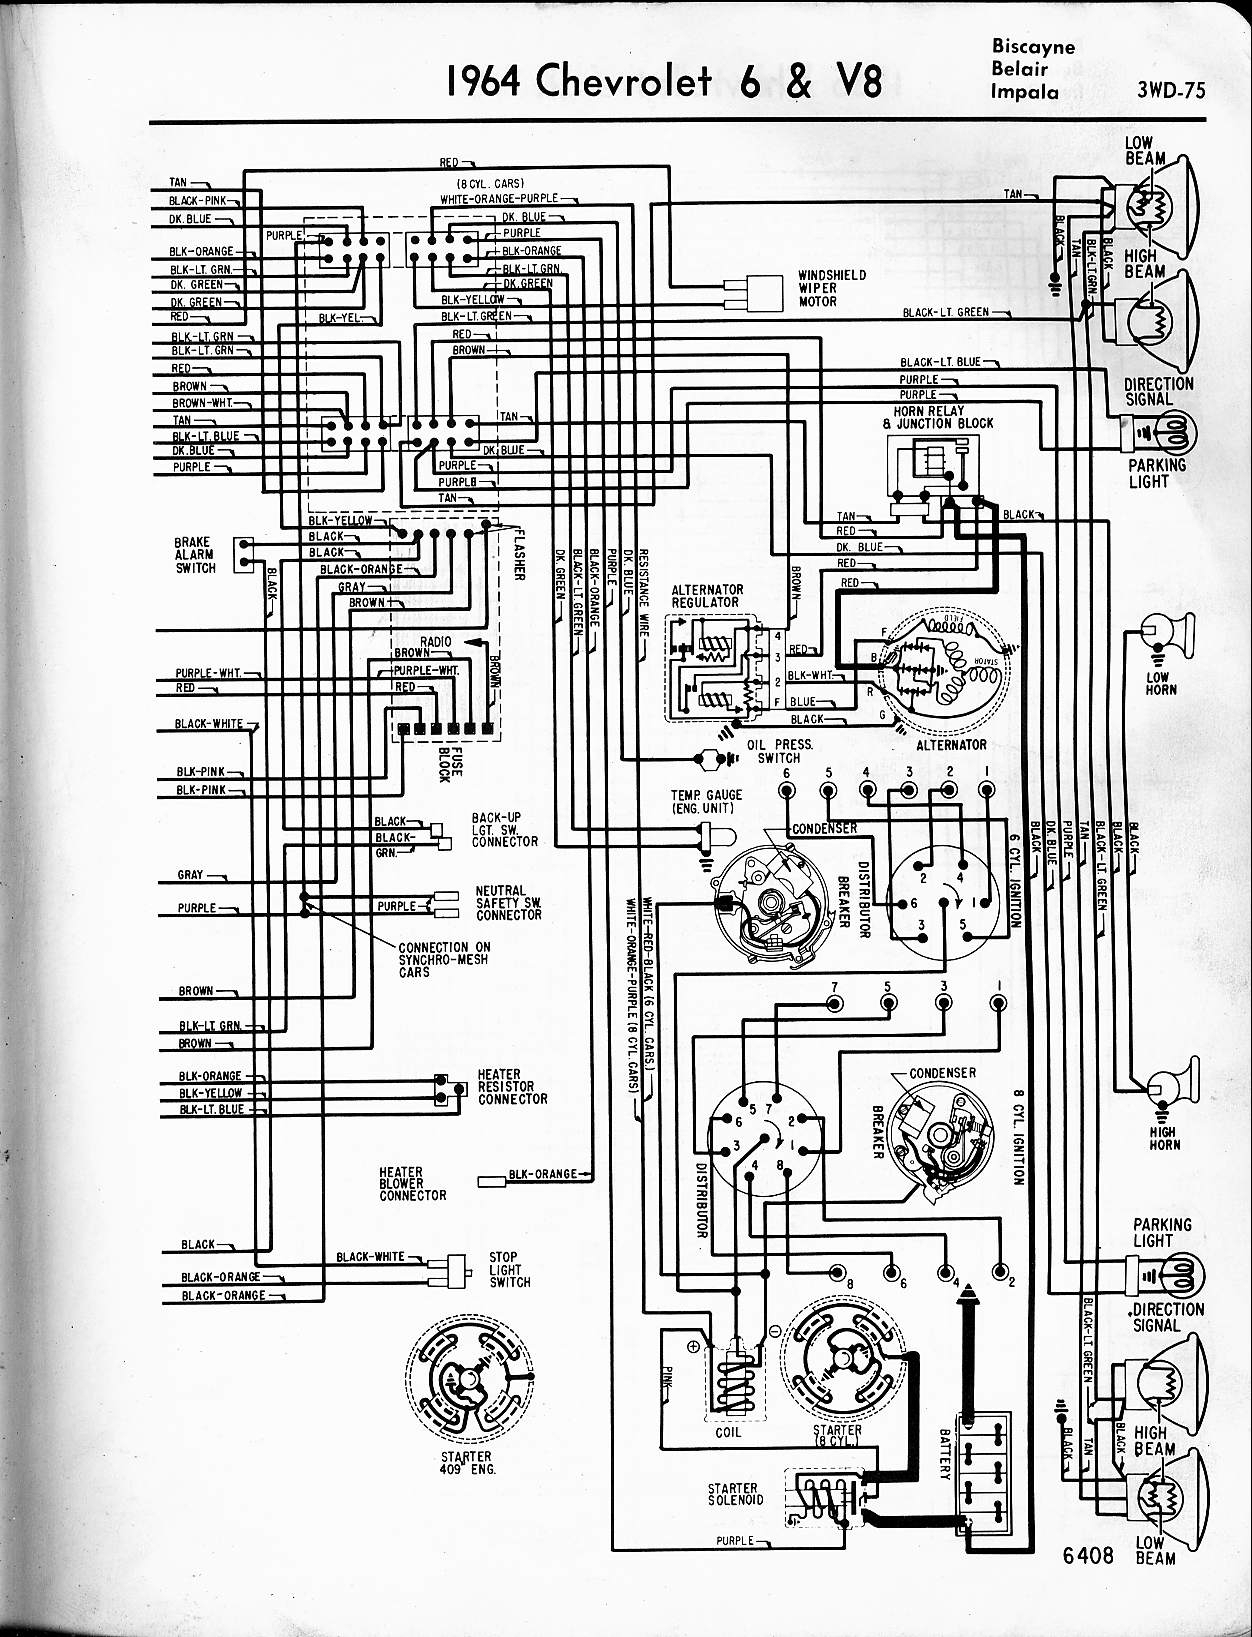 2005 Chevy Impala Radio Wiring Diagram Wiring Diagram